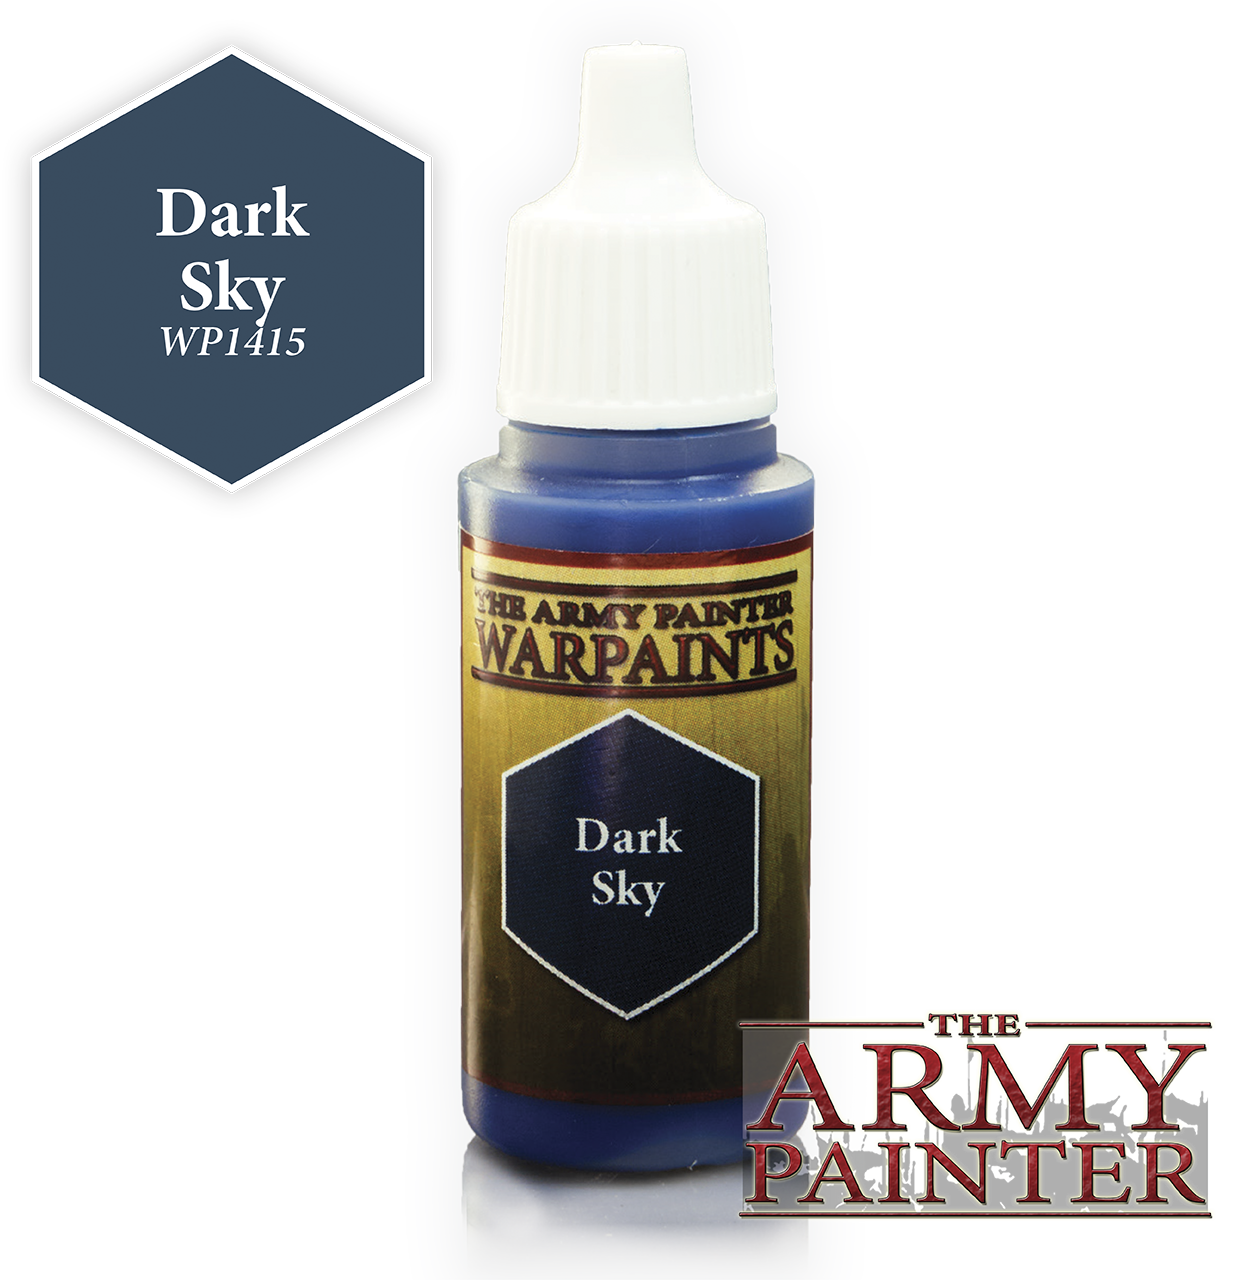 The ARMY PAINTER: Acrylics Warpaint - Dark Sky | Tacoma Games